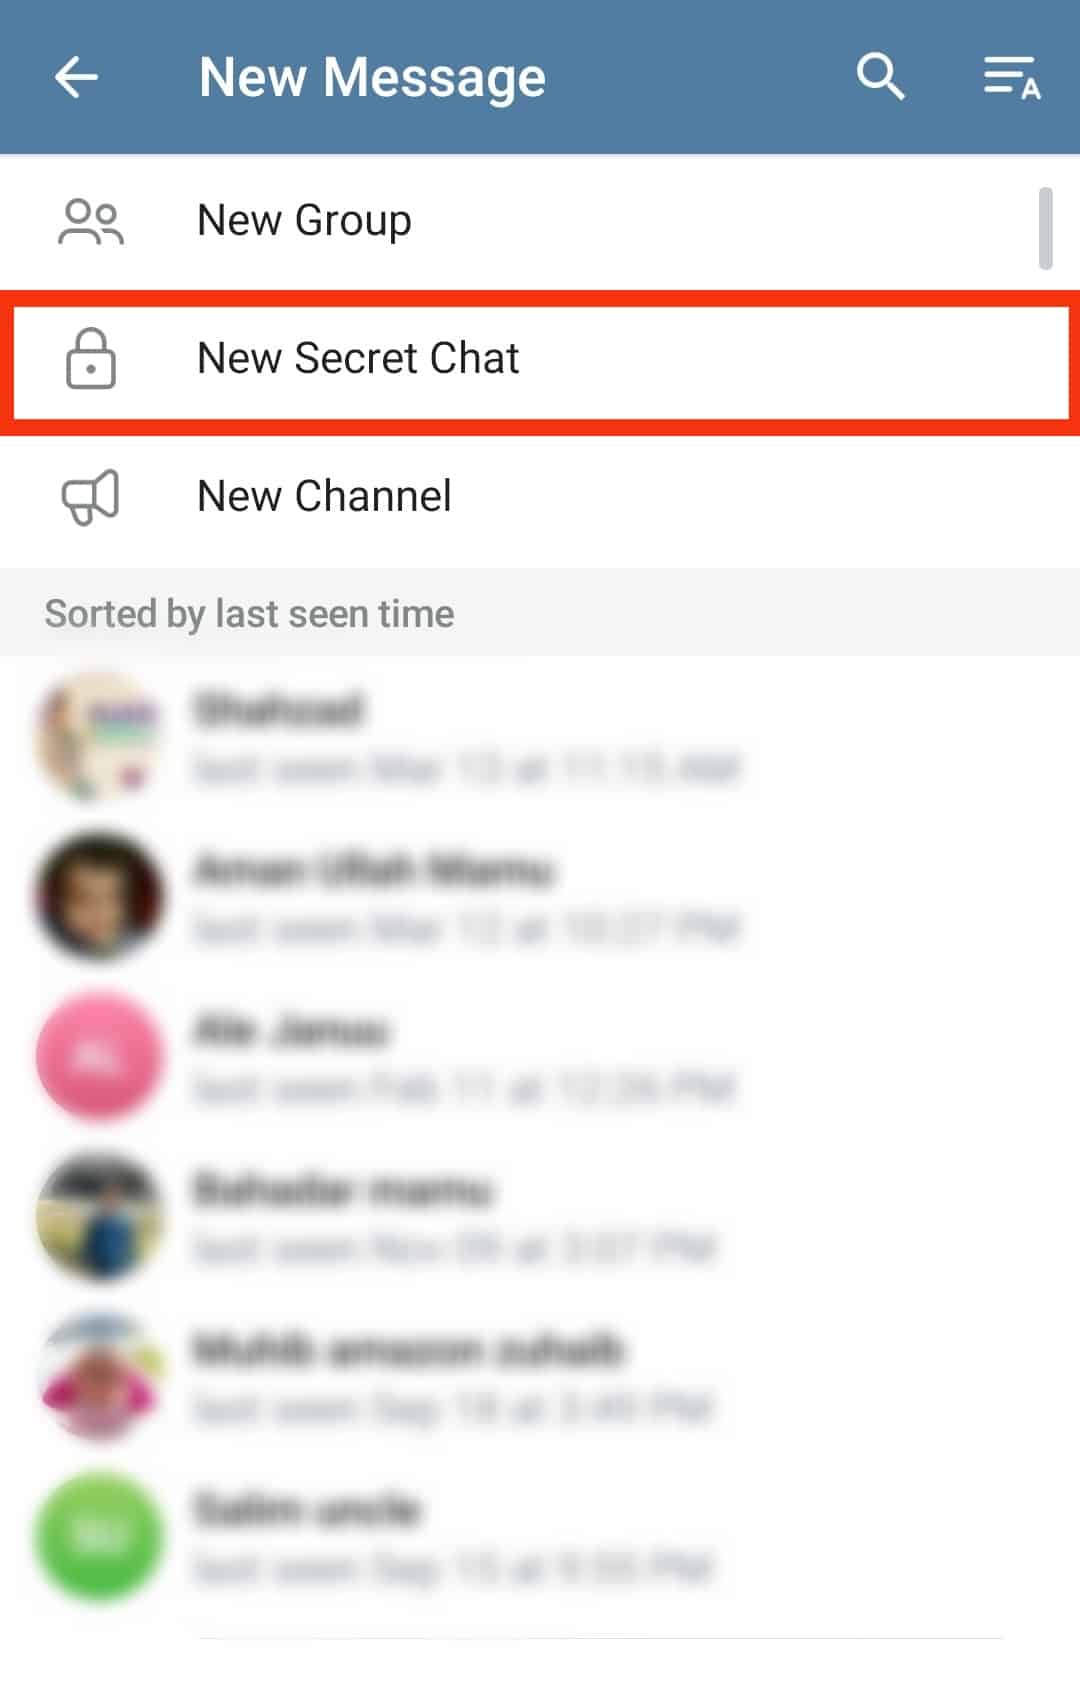 Tap New Secret Chat